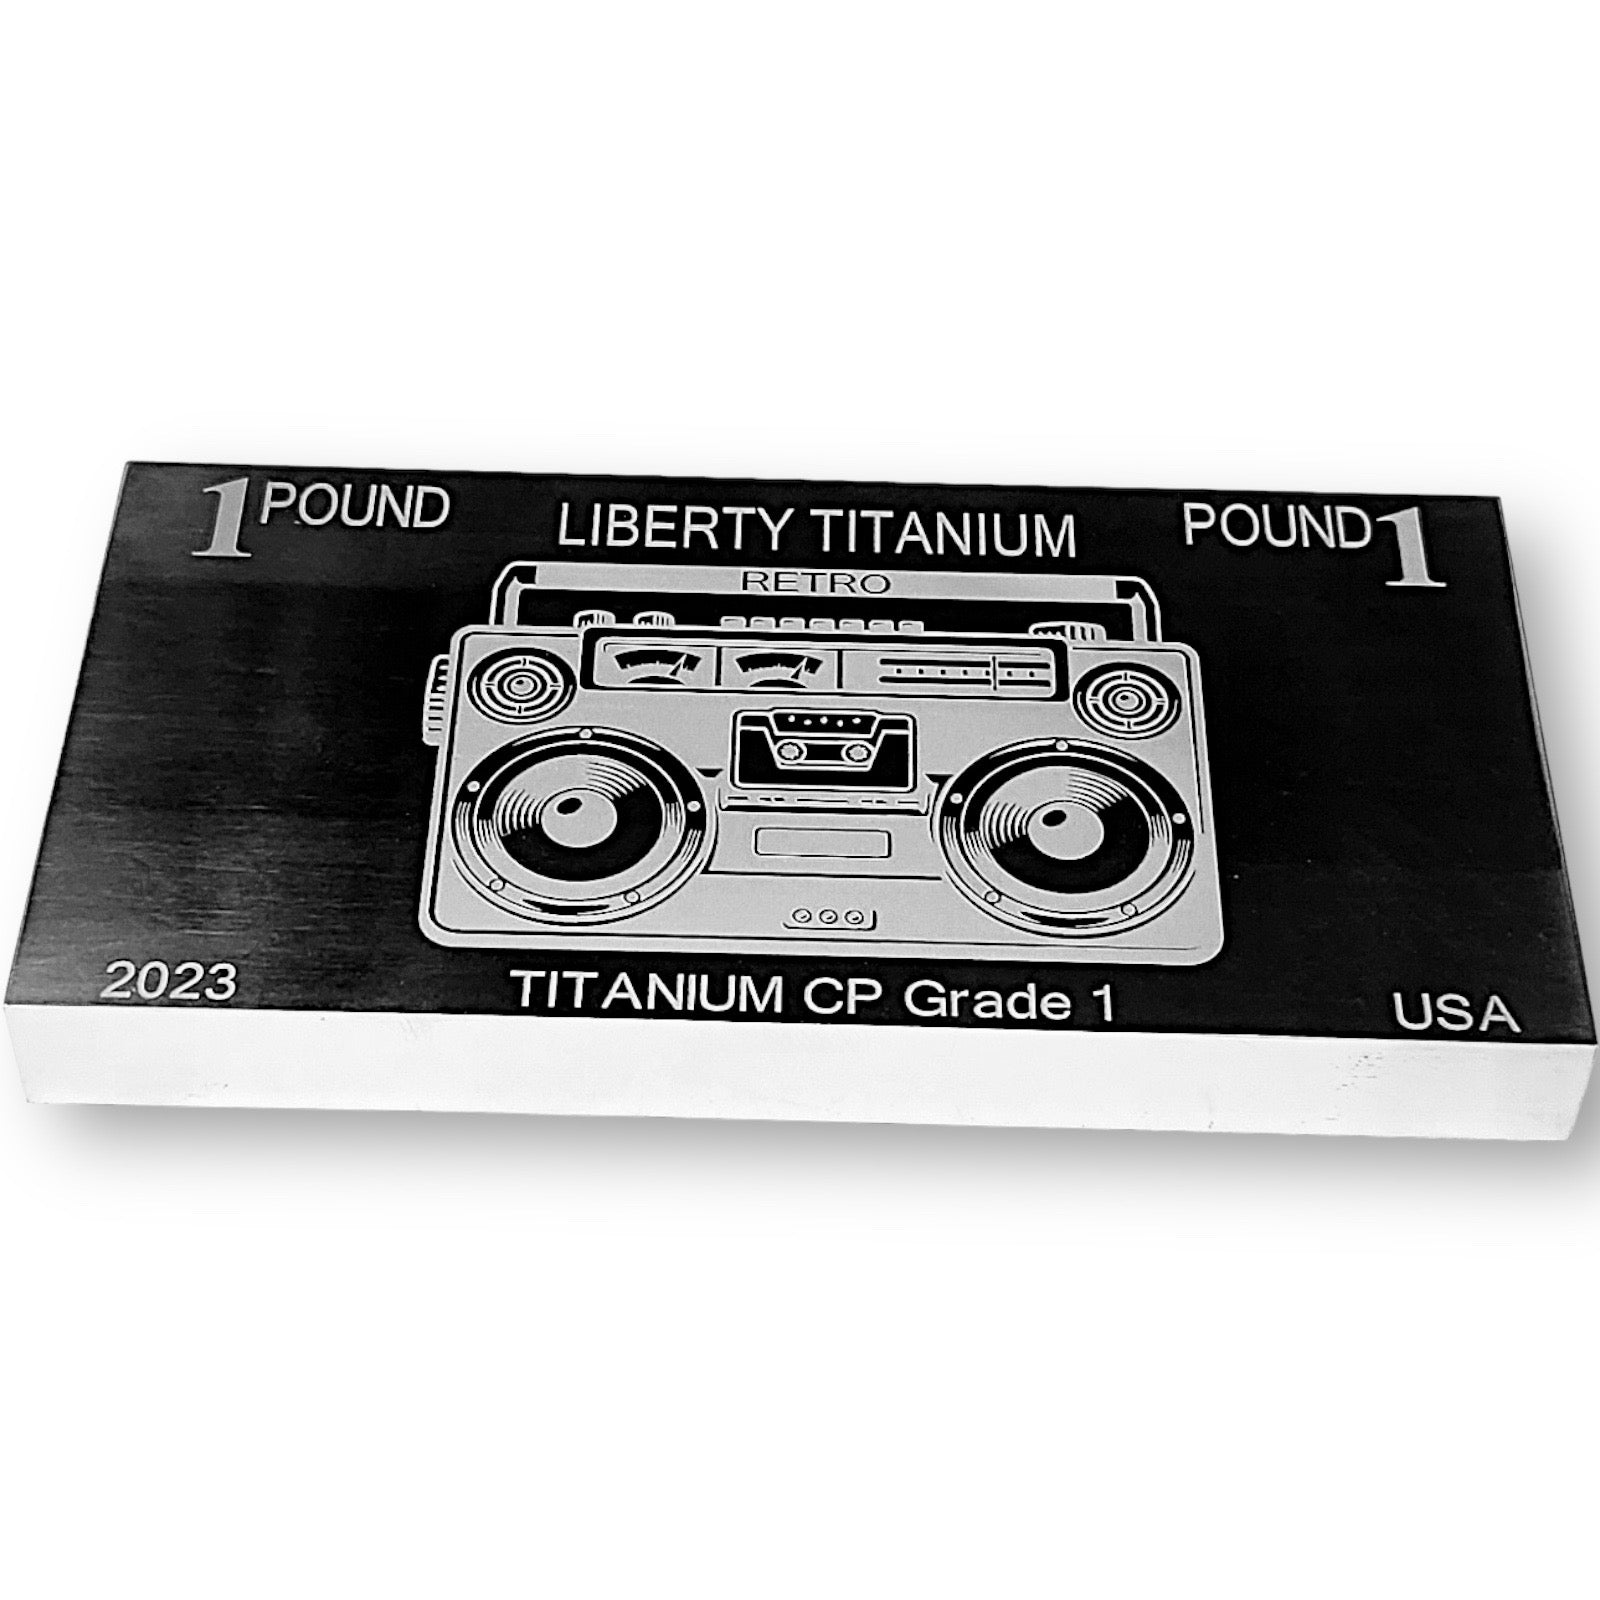 Retro Boombox 1 pound titanium bullion bar - retro series by Liberty Copper